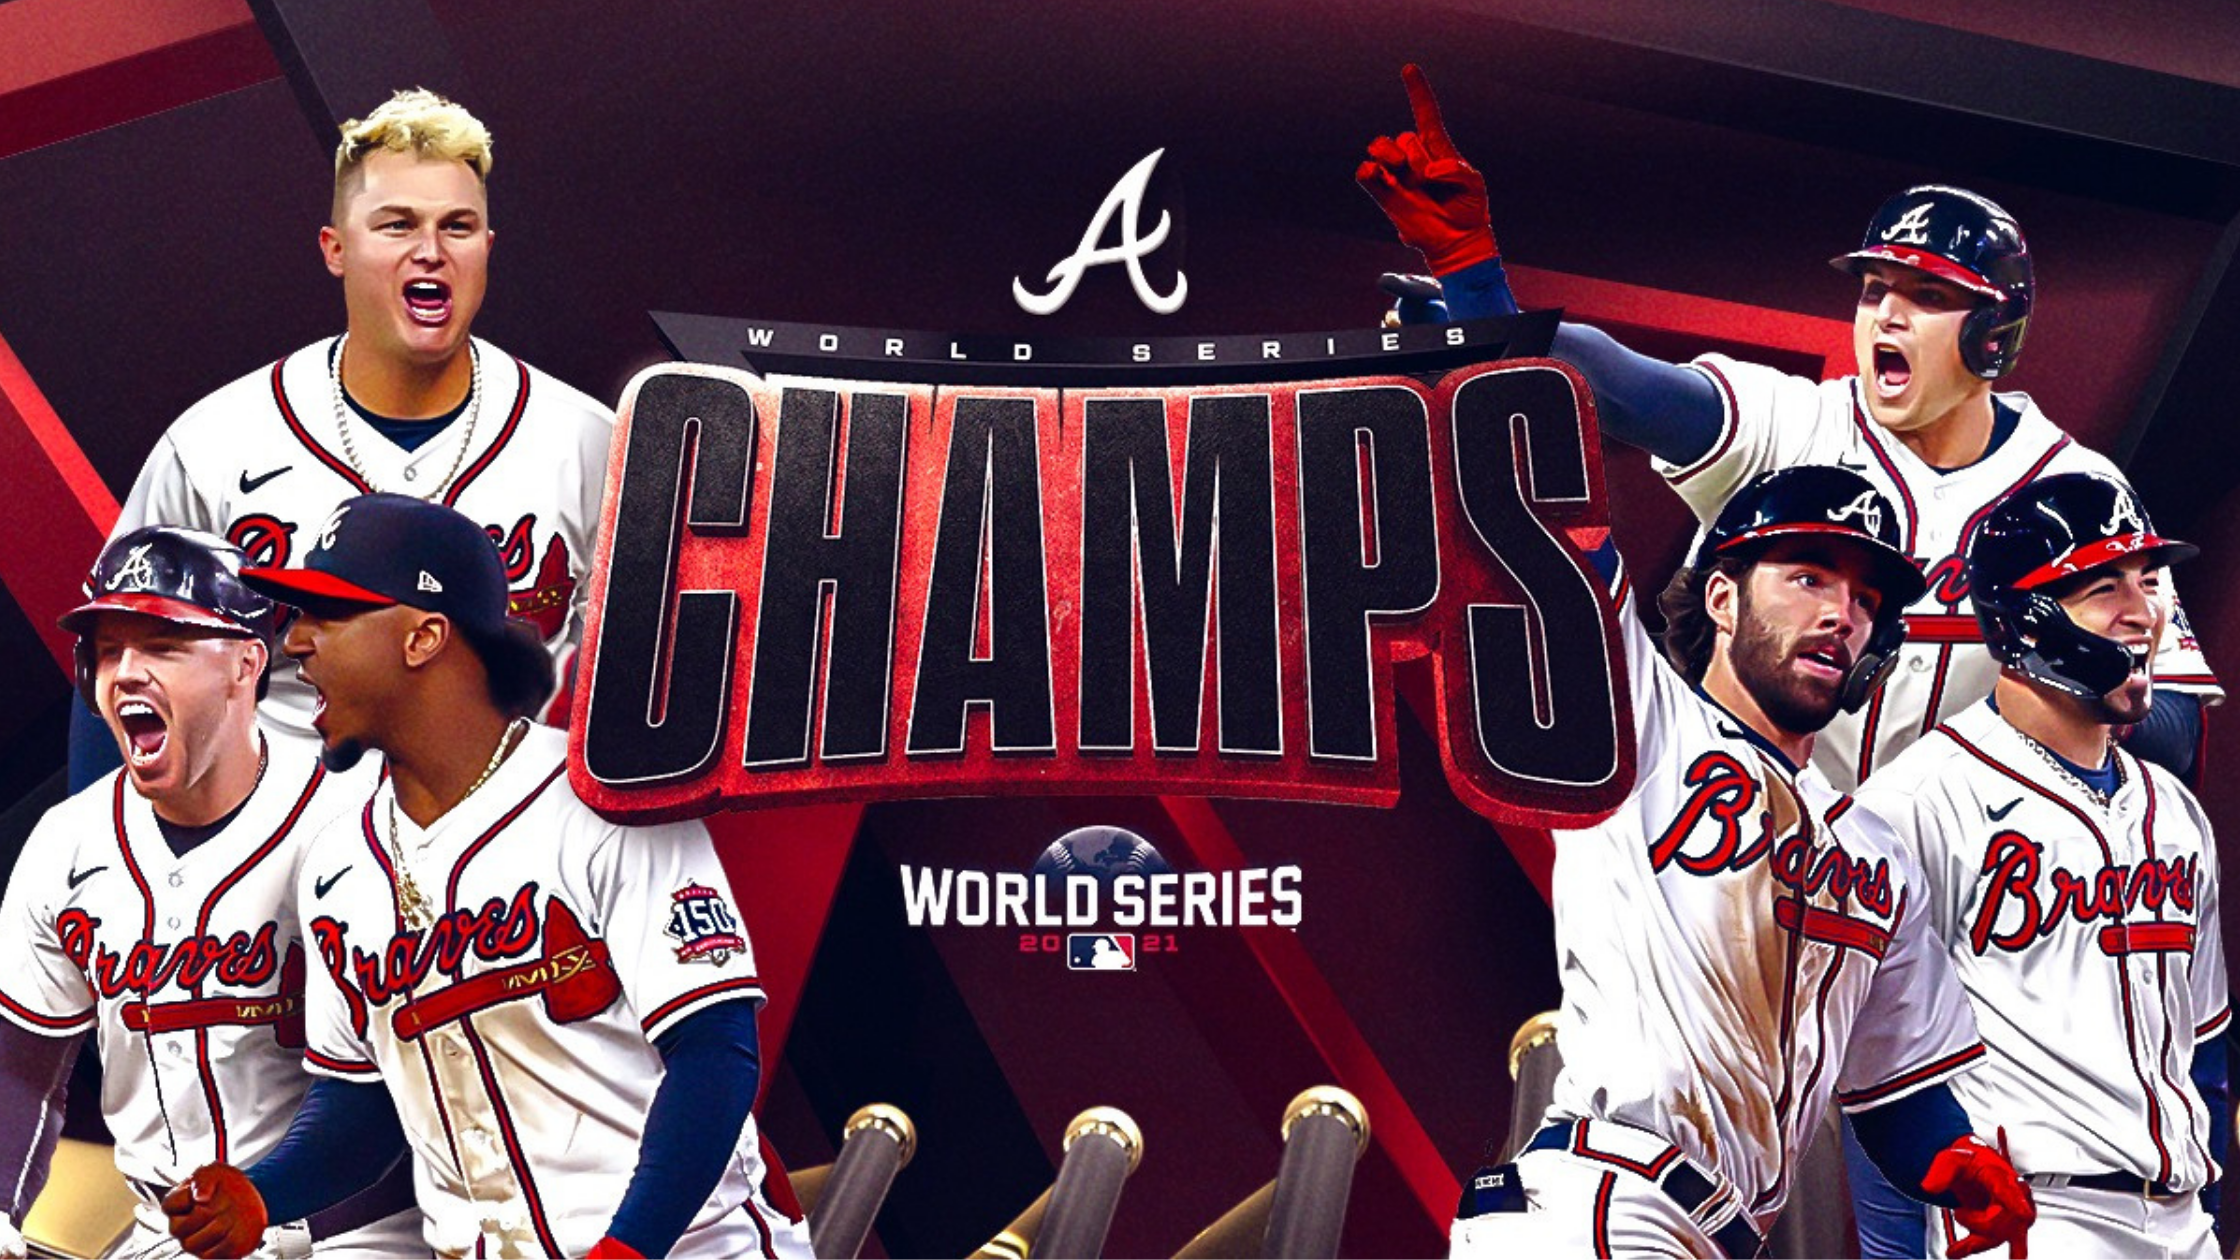 Atlanta Braves 2021 World Series Champions, MLB image showing the winning team celebrating, image courtesy of MLB